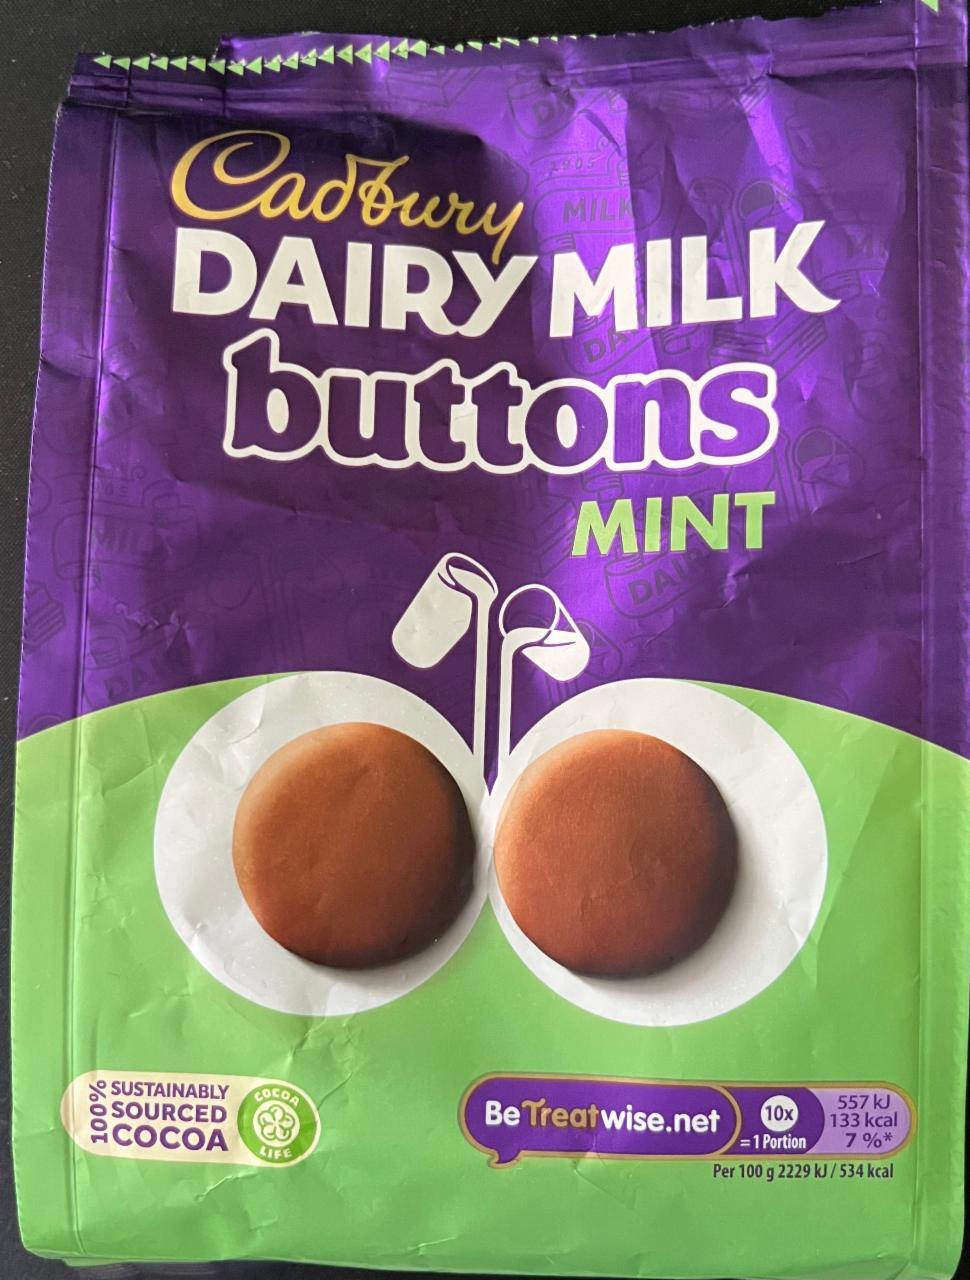 Fotografie - Dairy milk buttons Cadbury